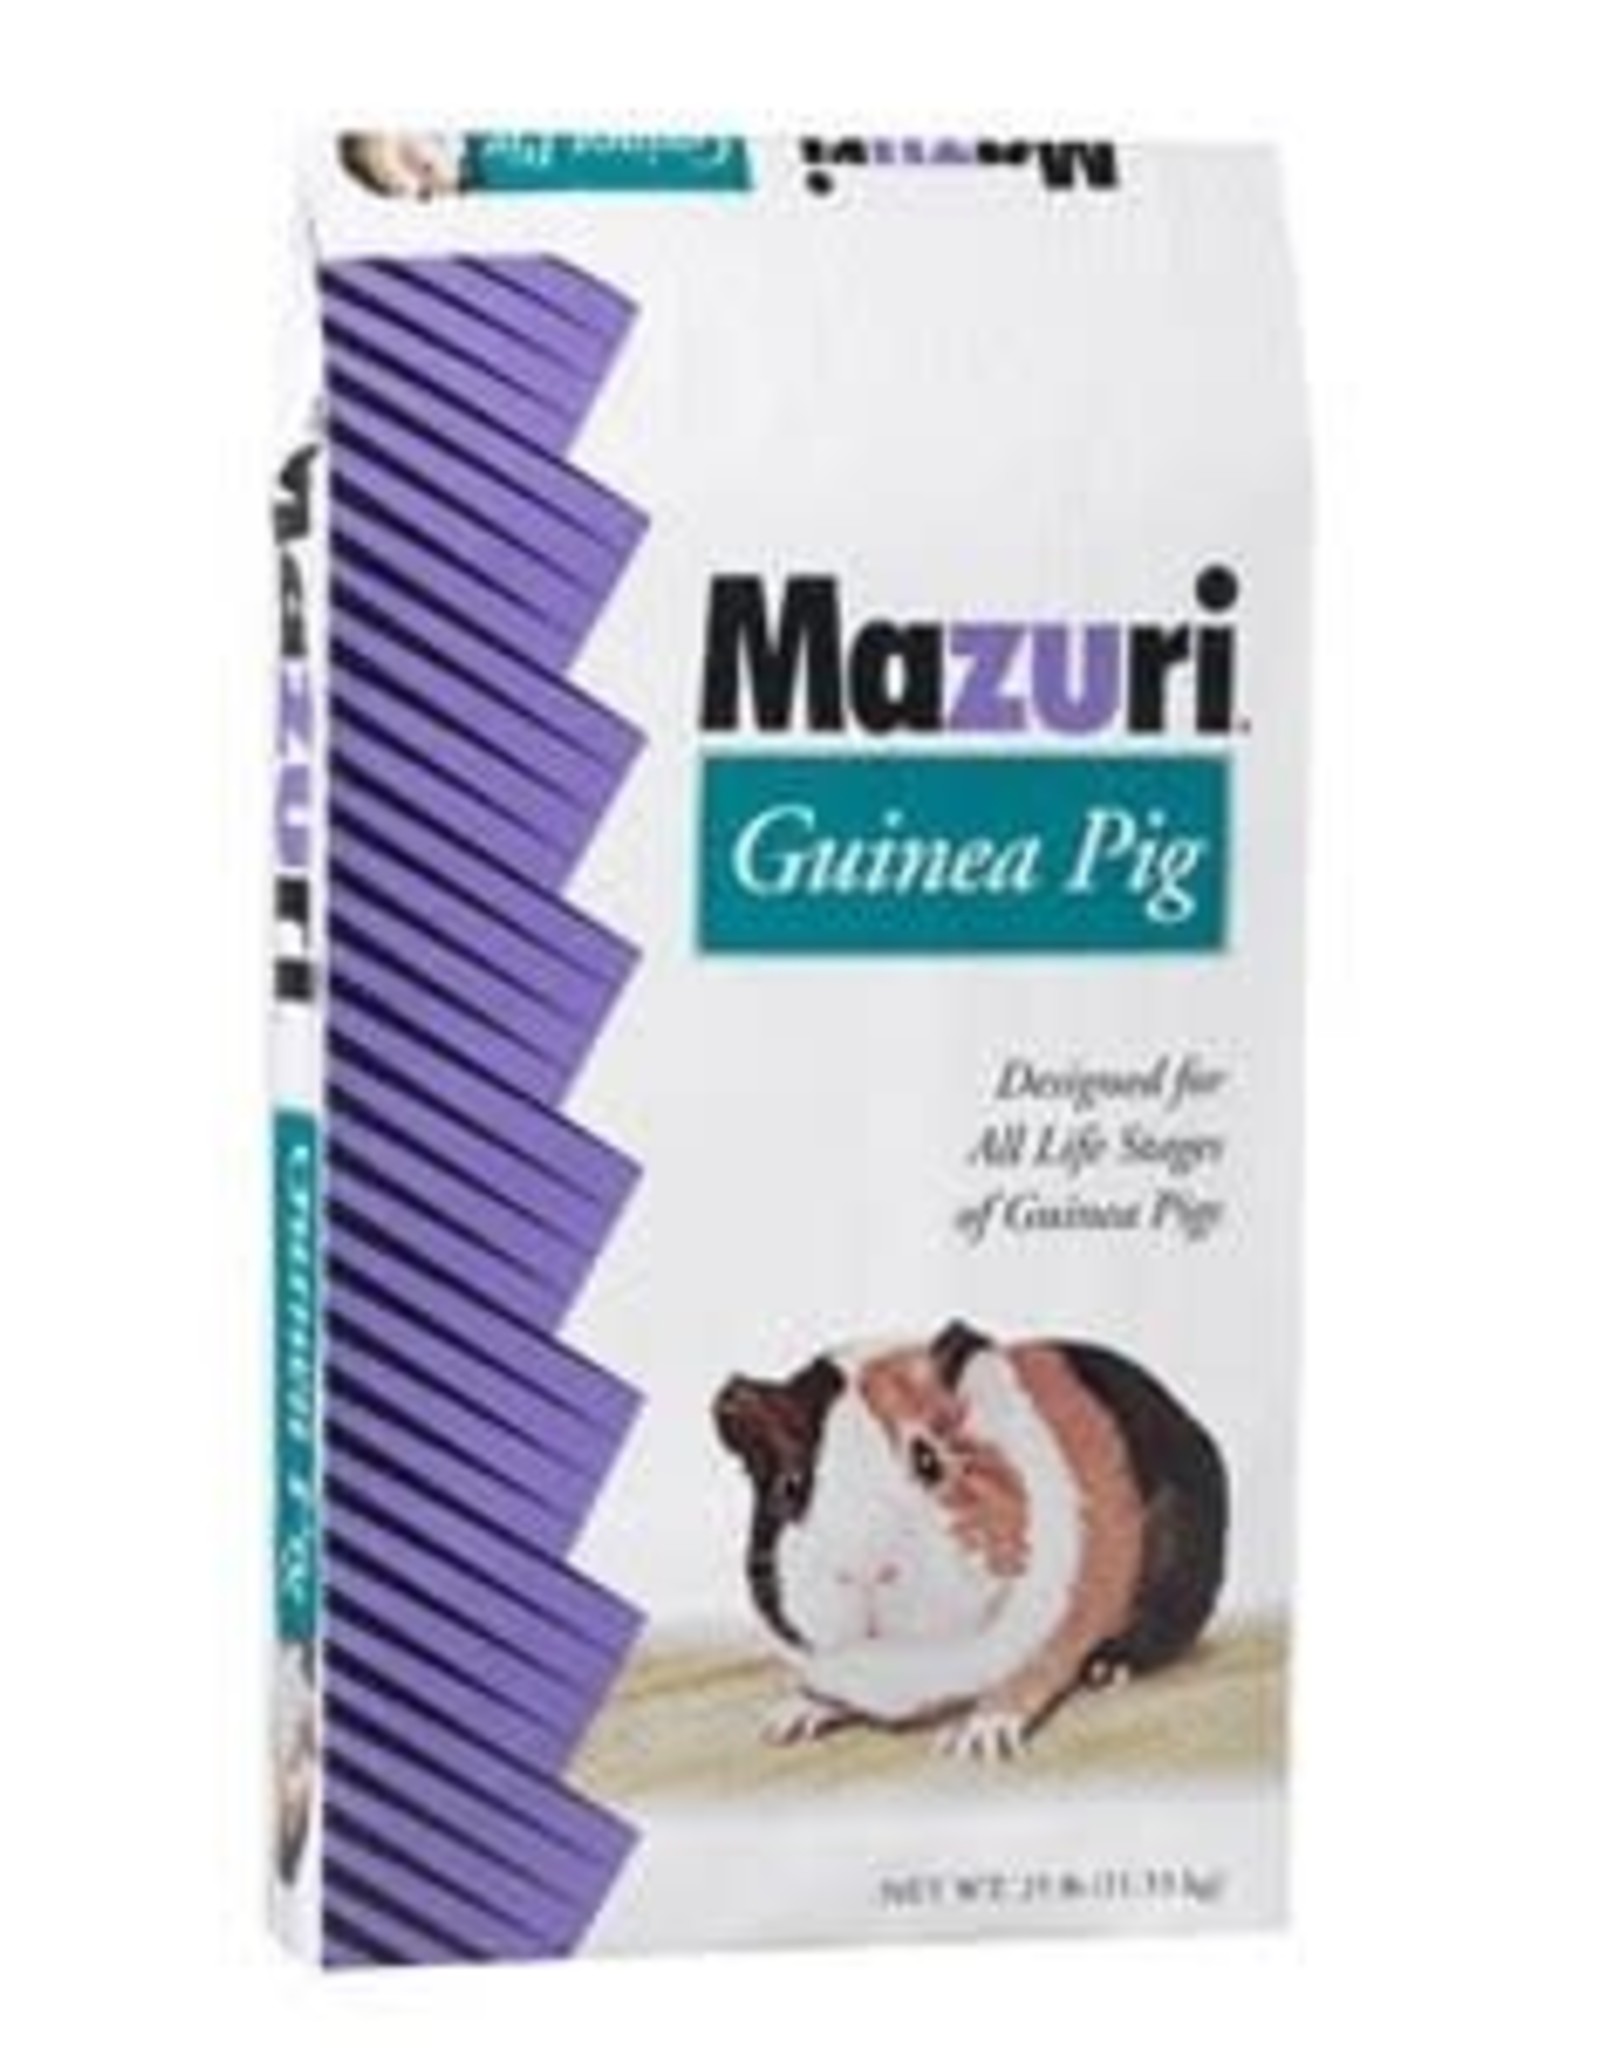 PURINA ANIMAL NUTRITION Purina Mills Mazuri Guinea Pig Pellets 25 lb.